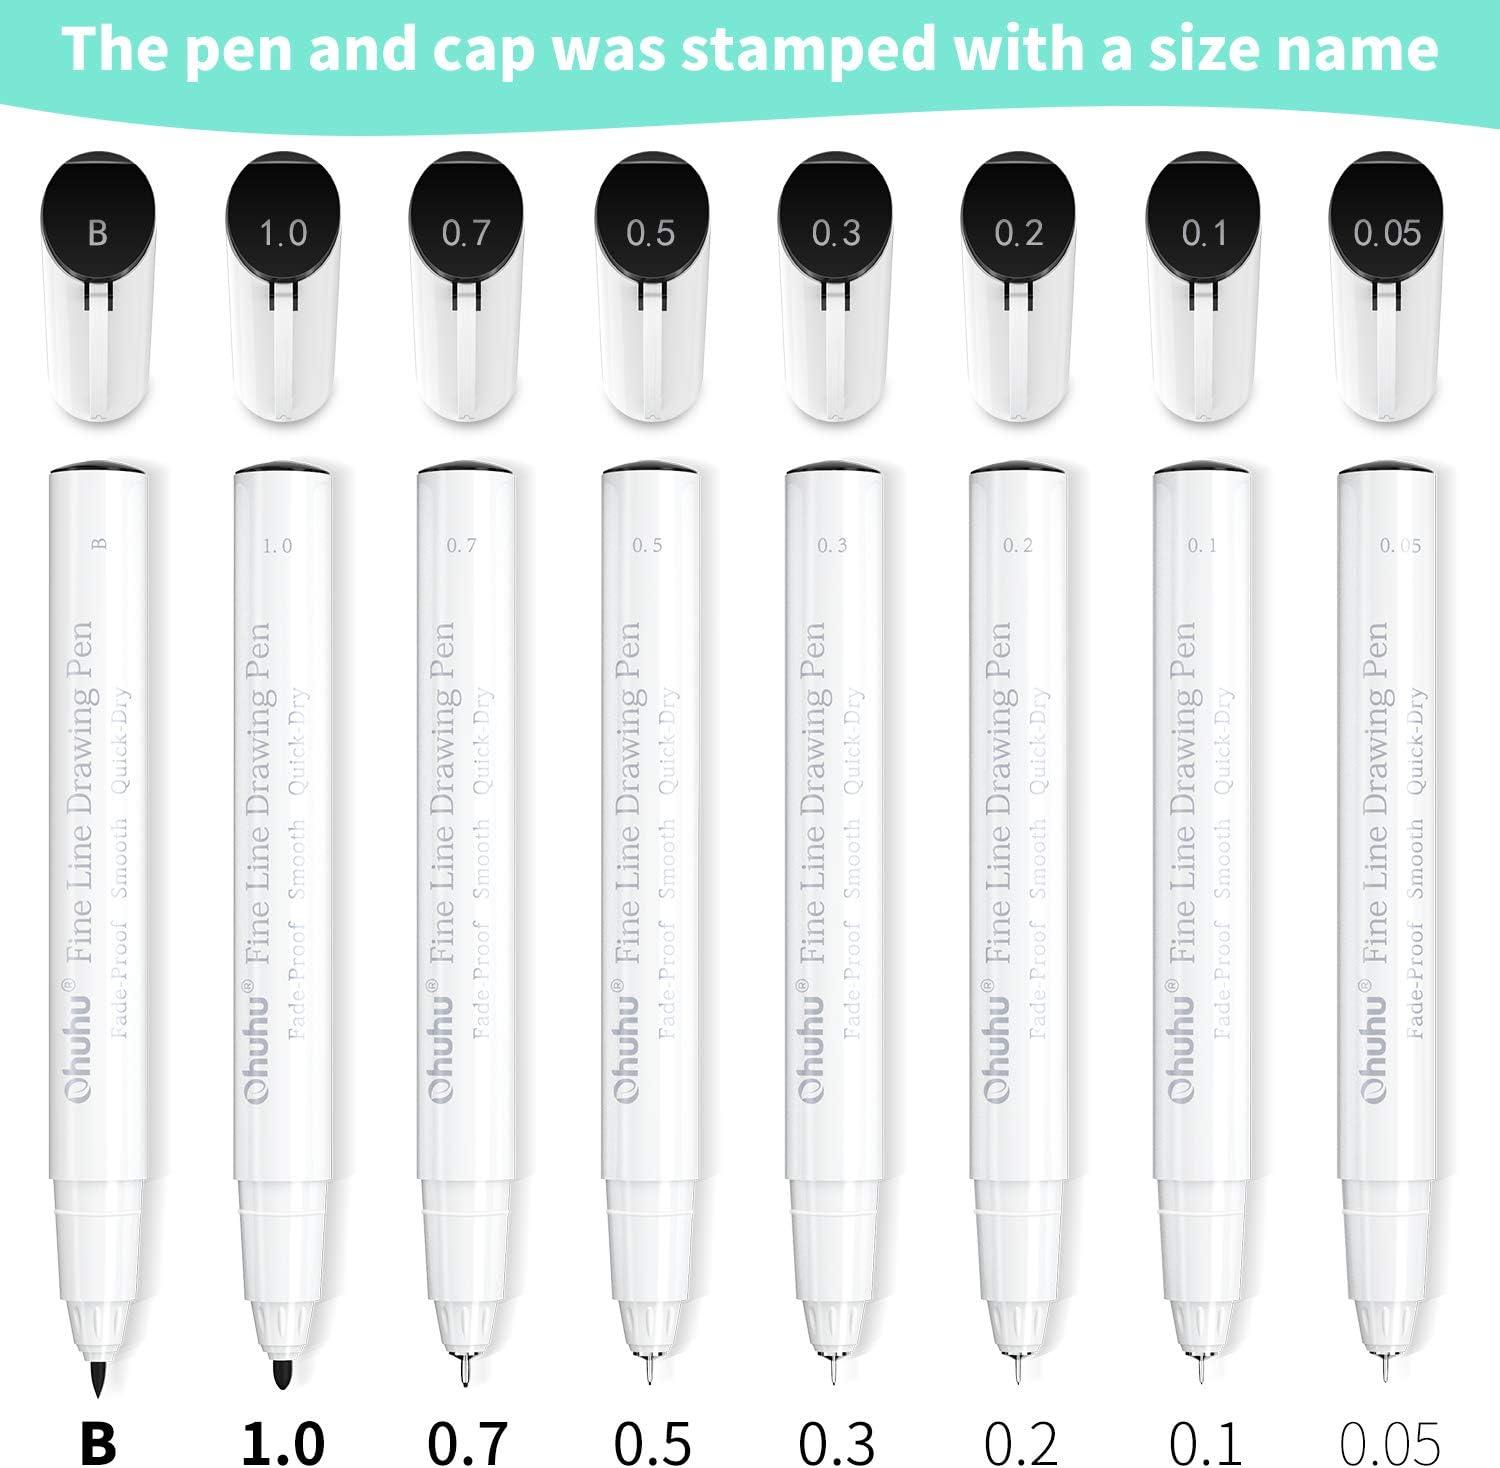  Ohuhu Premium Metallic Marker Pens Fine Tip, Set of 10